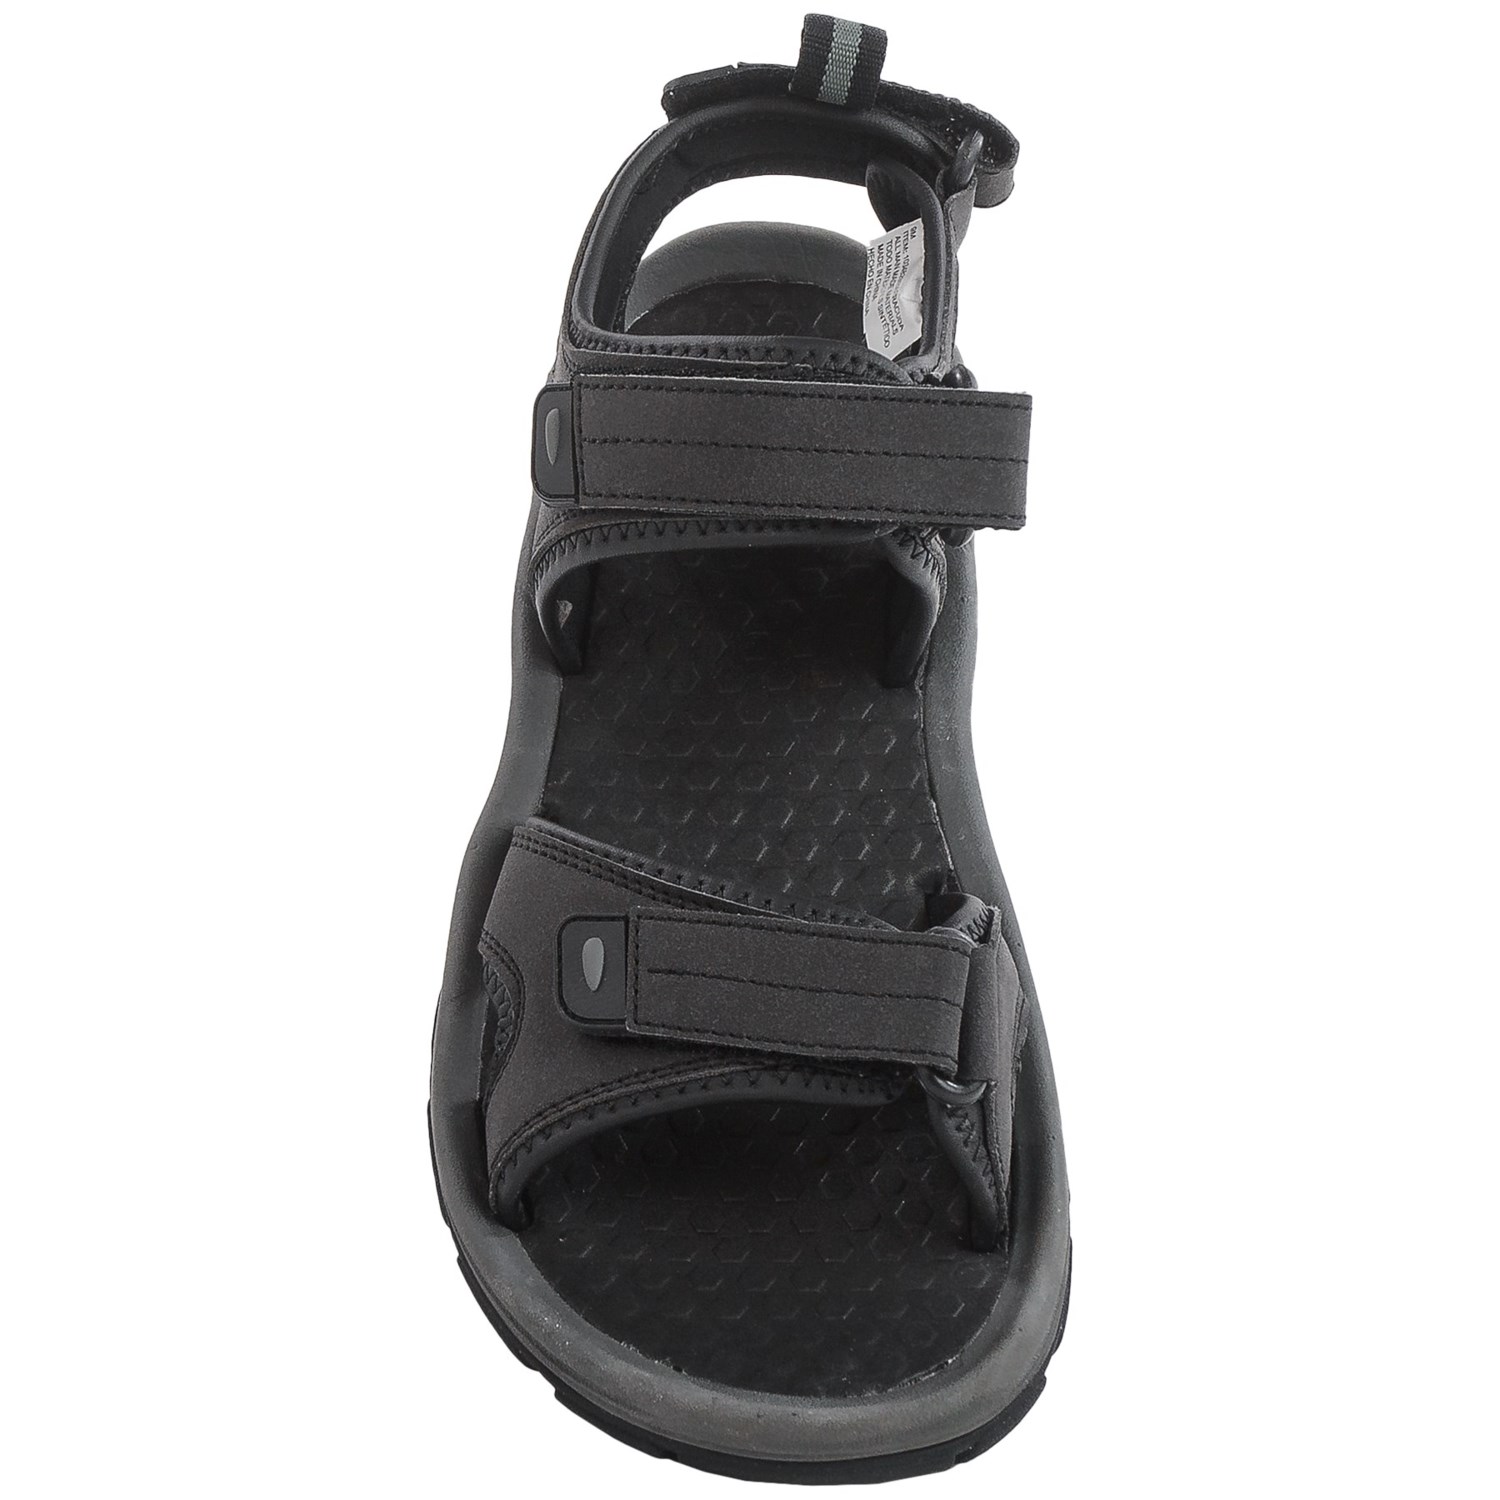 Khombu Barracuda Sport Sandals (For Men) - Save 79%